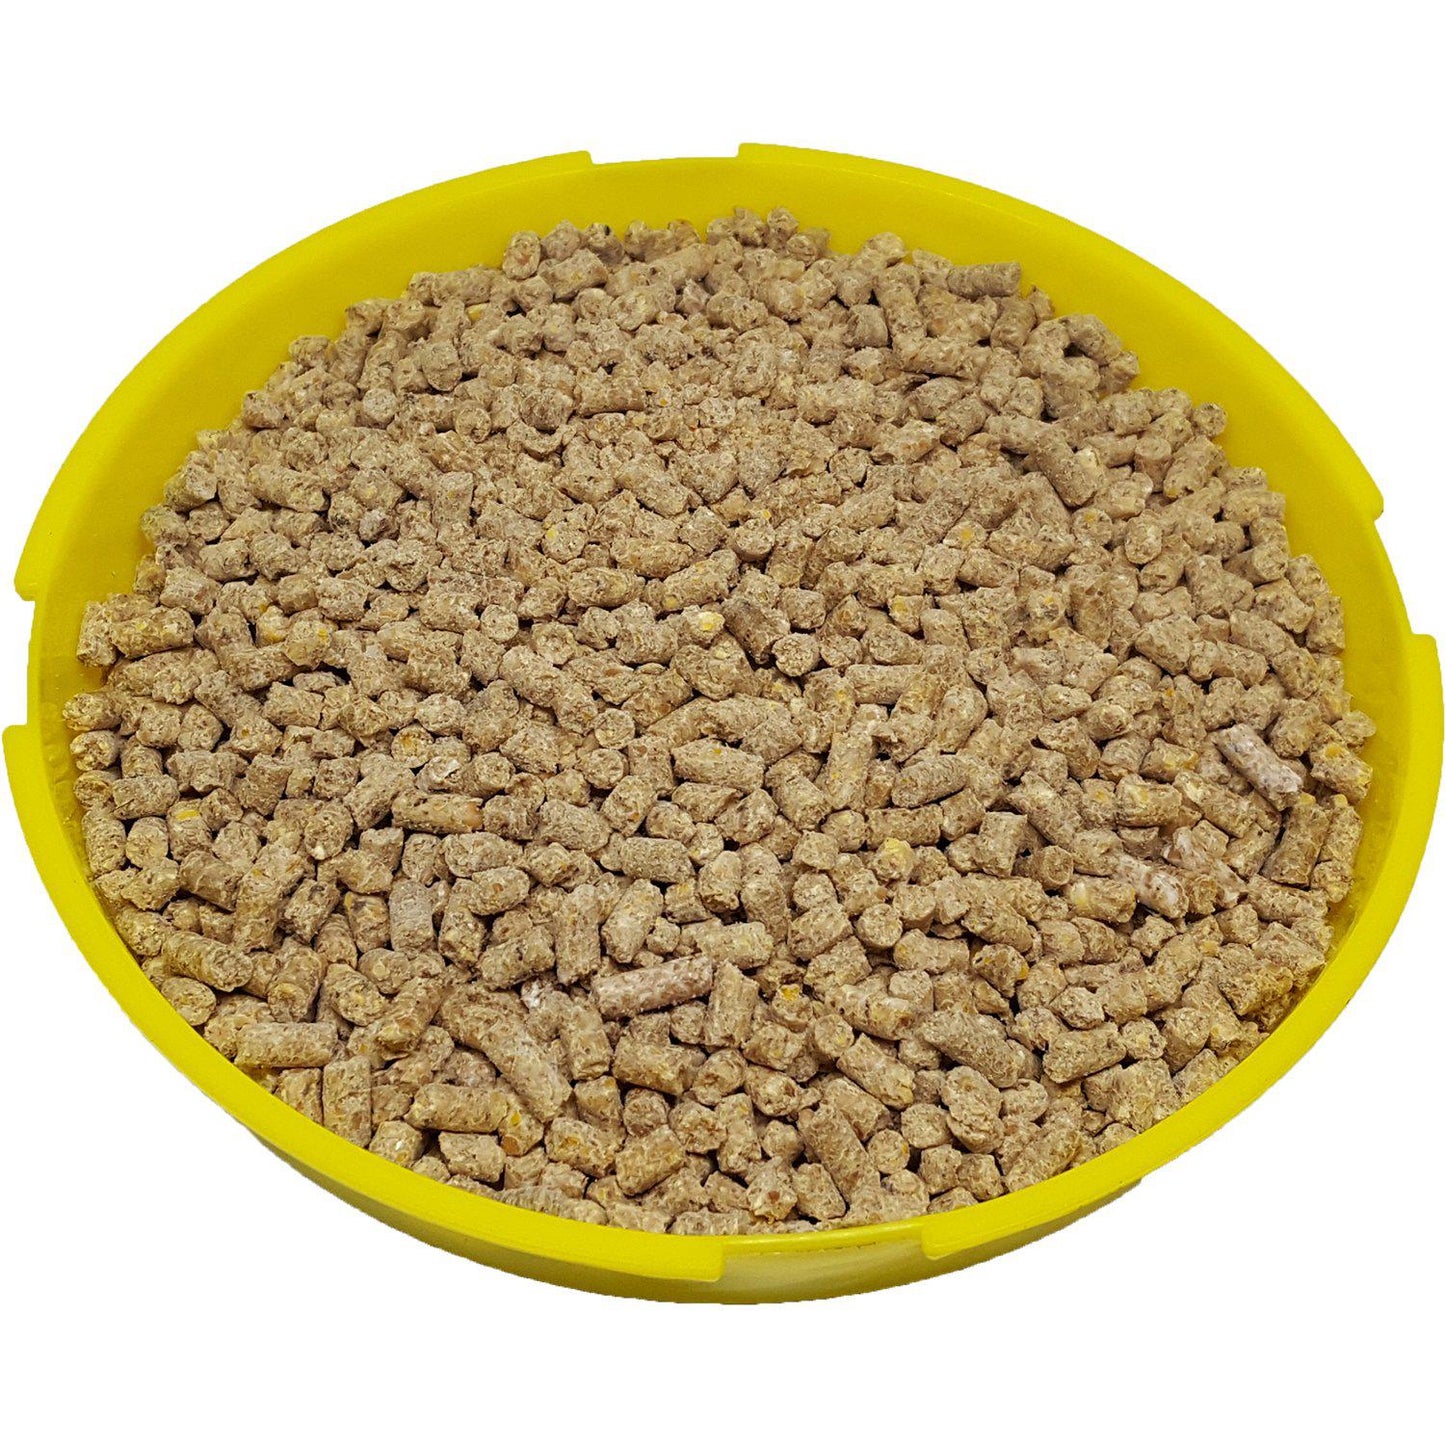 HI-PRO FEEDS® ProForm Poultry Feed Complete Layer Short Pellet 17% 20 KG Bag - Critter Country Supply Ltd.